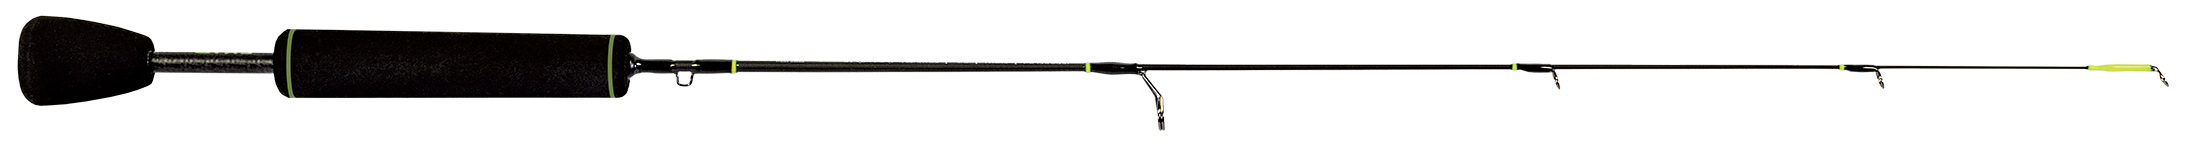 The 24 inch Cryo Ice rod displayed horizontally 